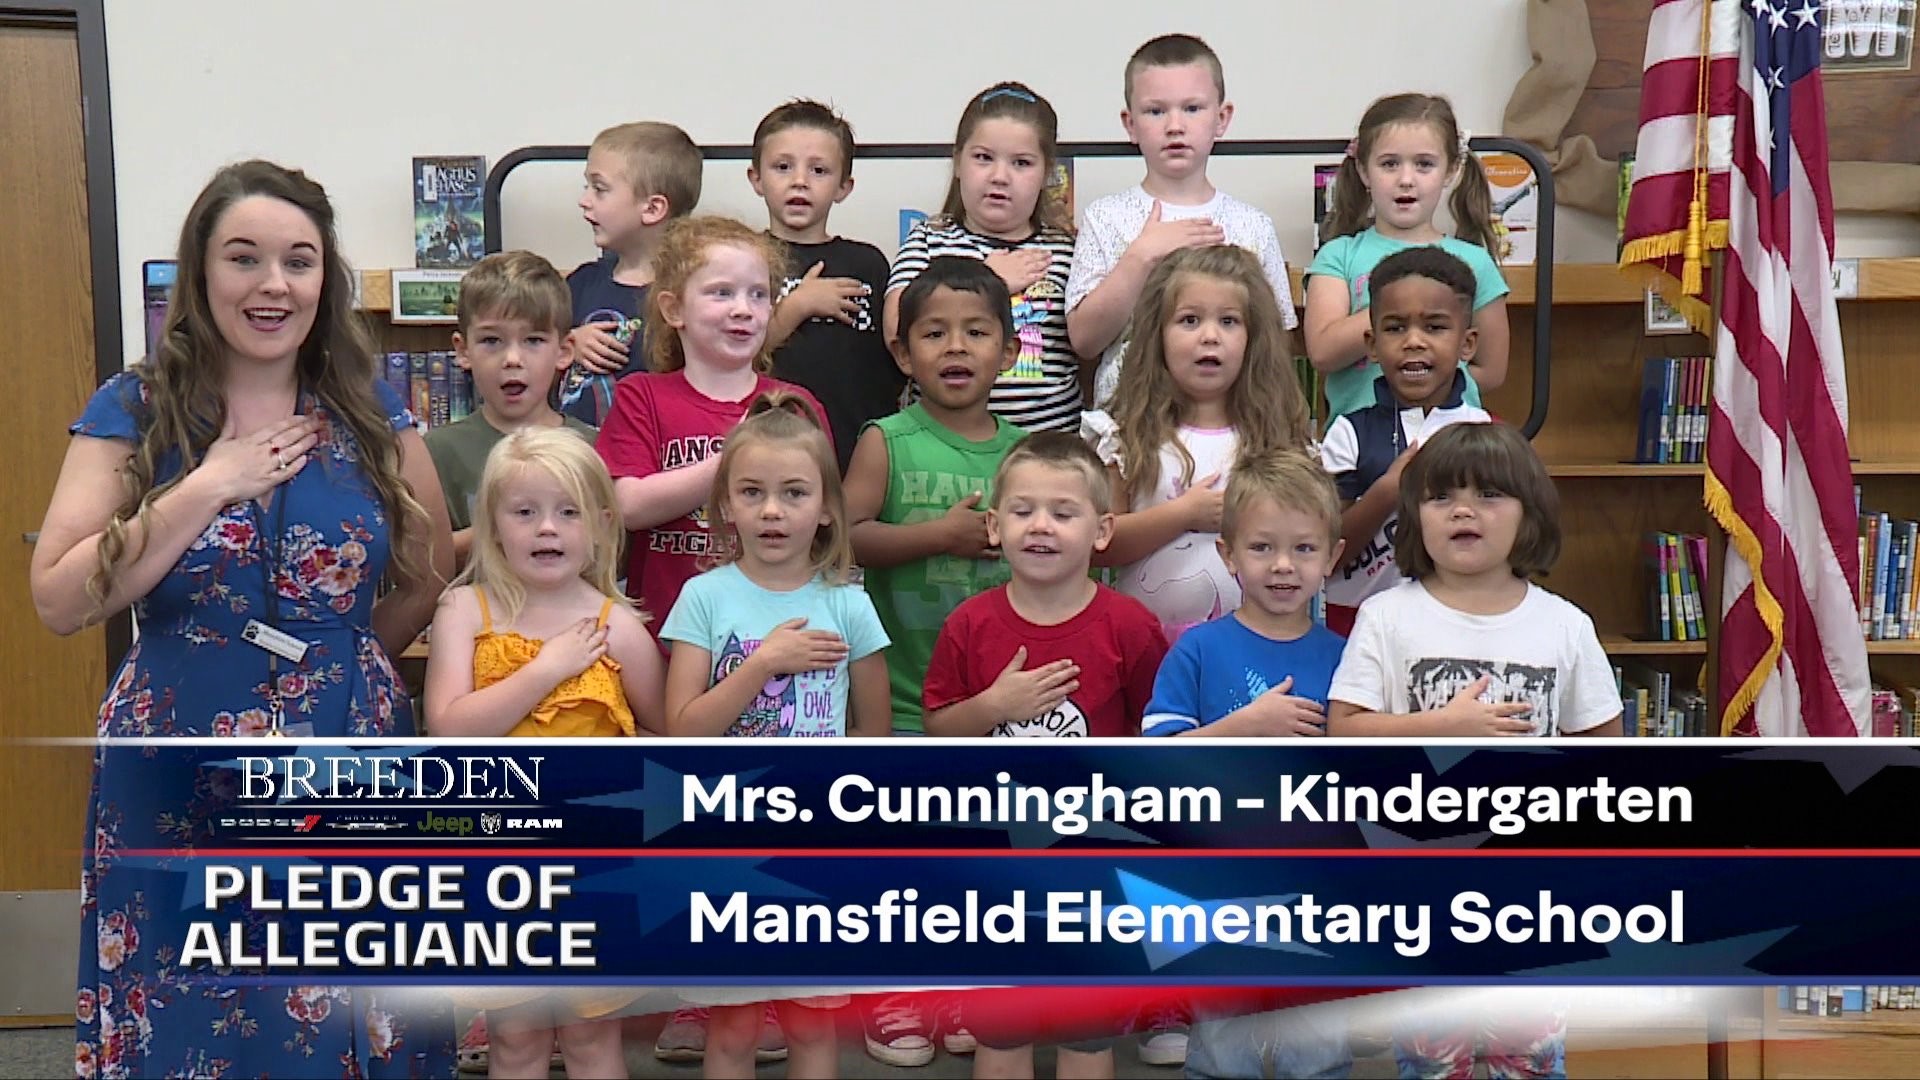 Mrs. Cunningham Kindergarten Mansfield Elementary School